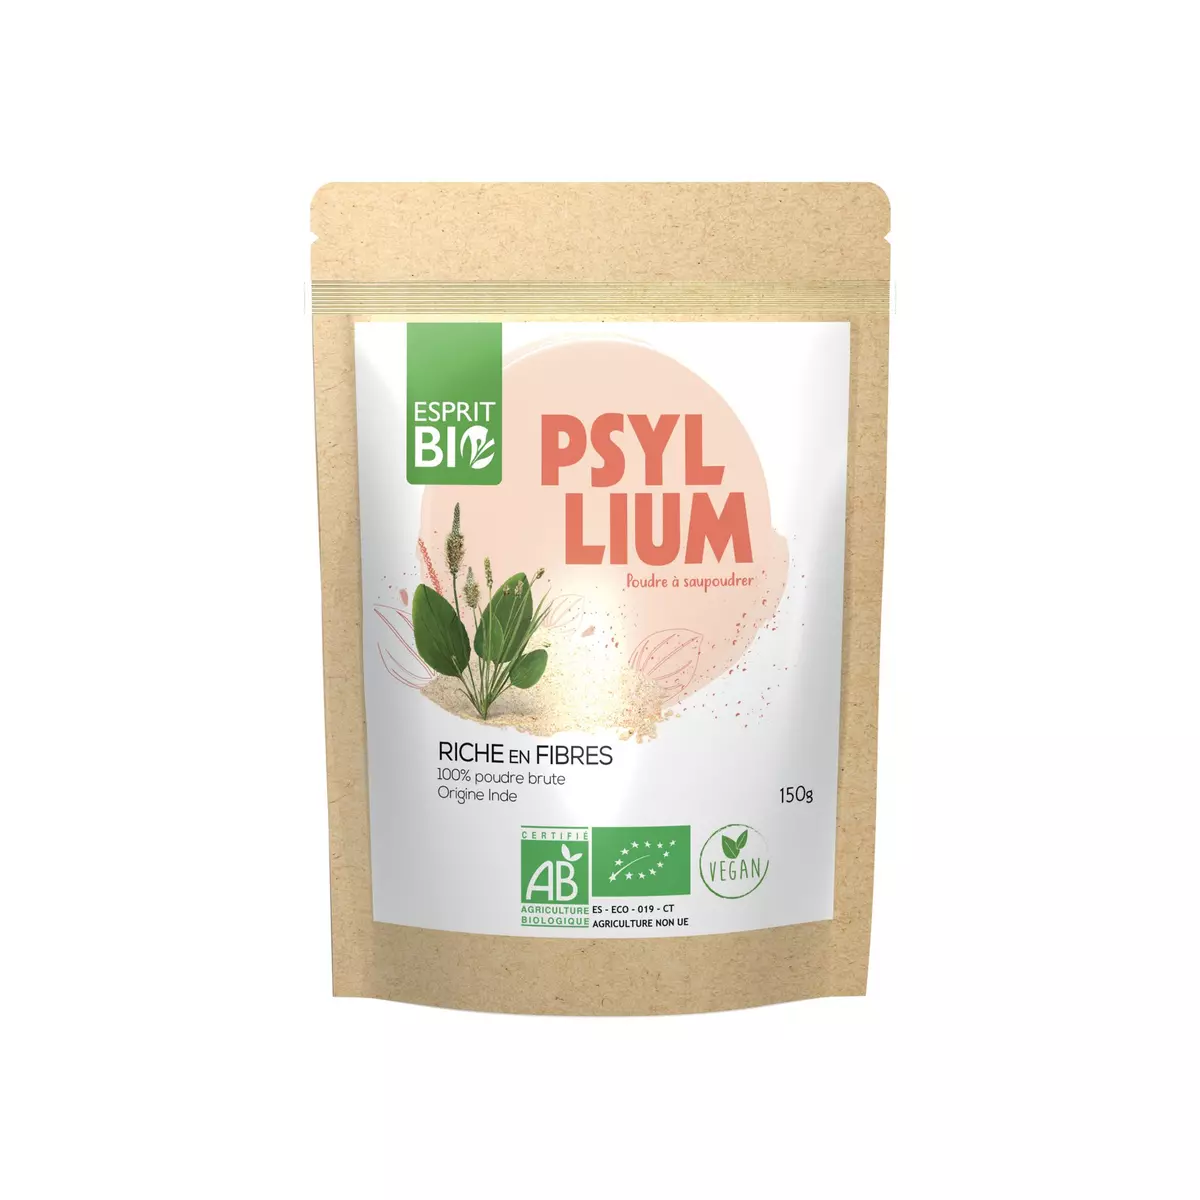 ESPRIT BIO Psyllium en poudre riche en fibre bio 150g